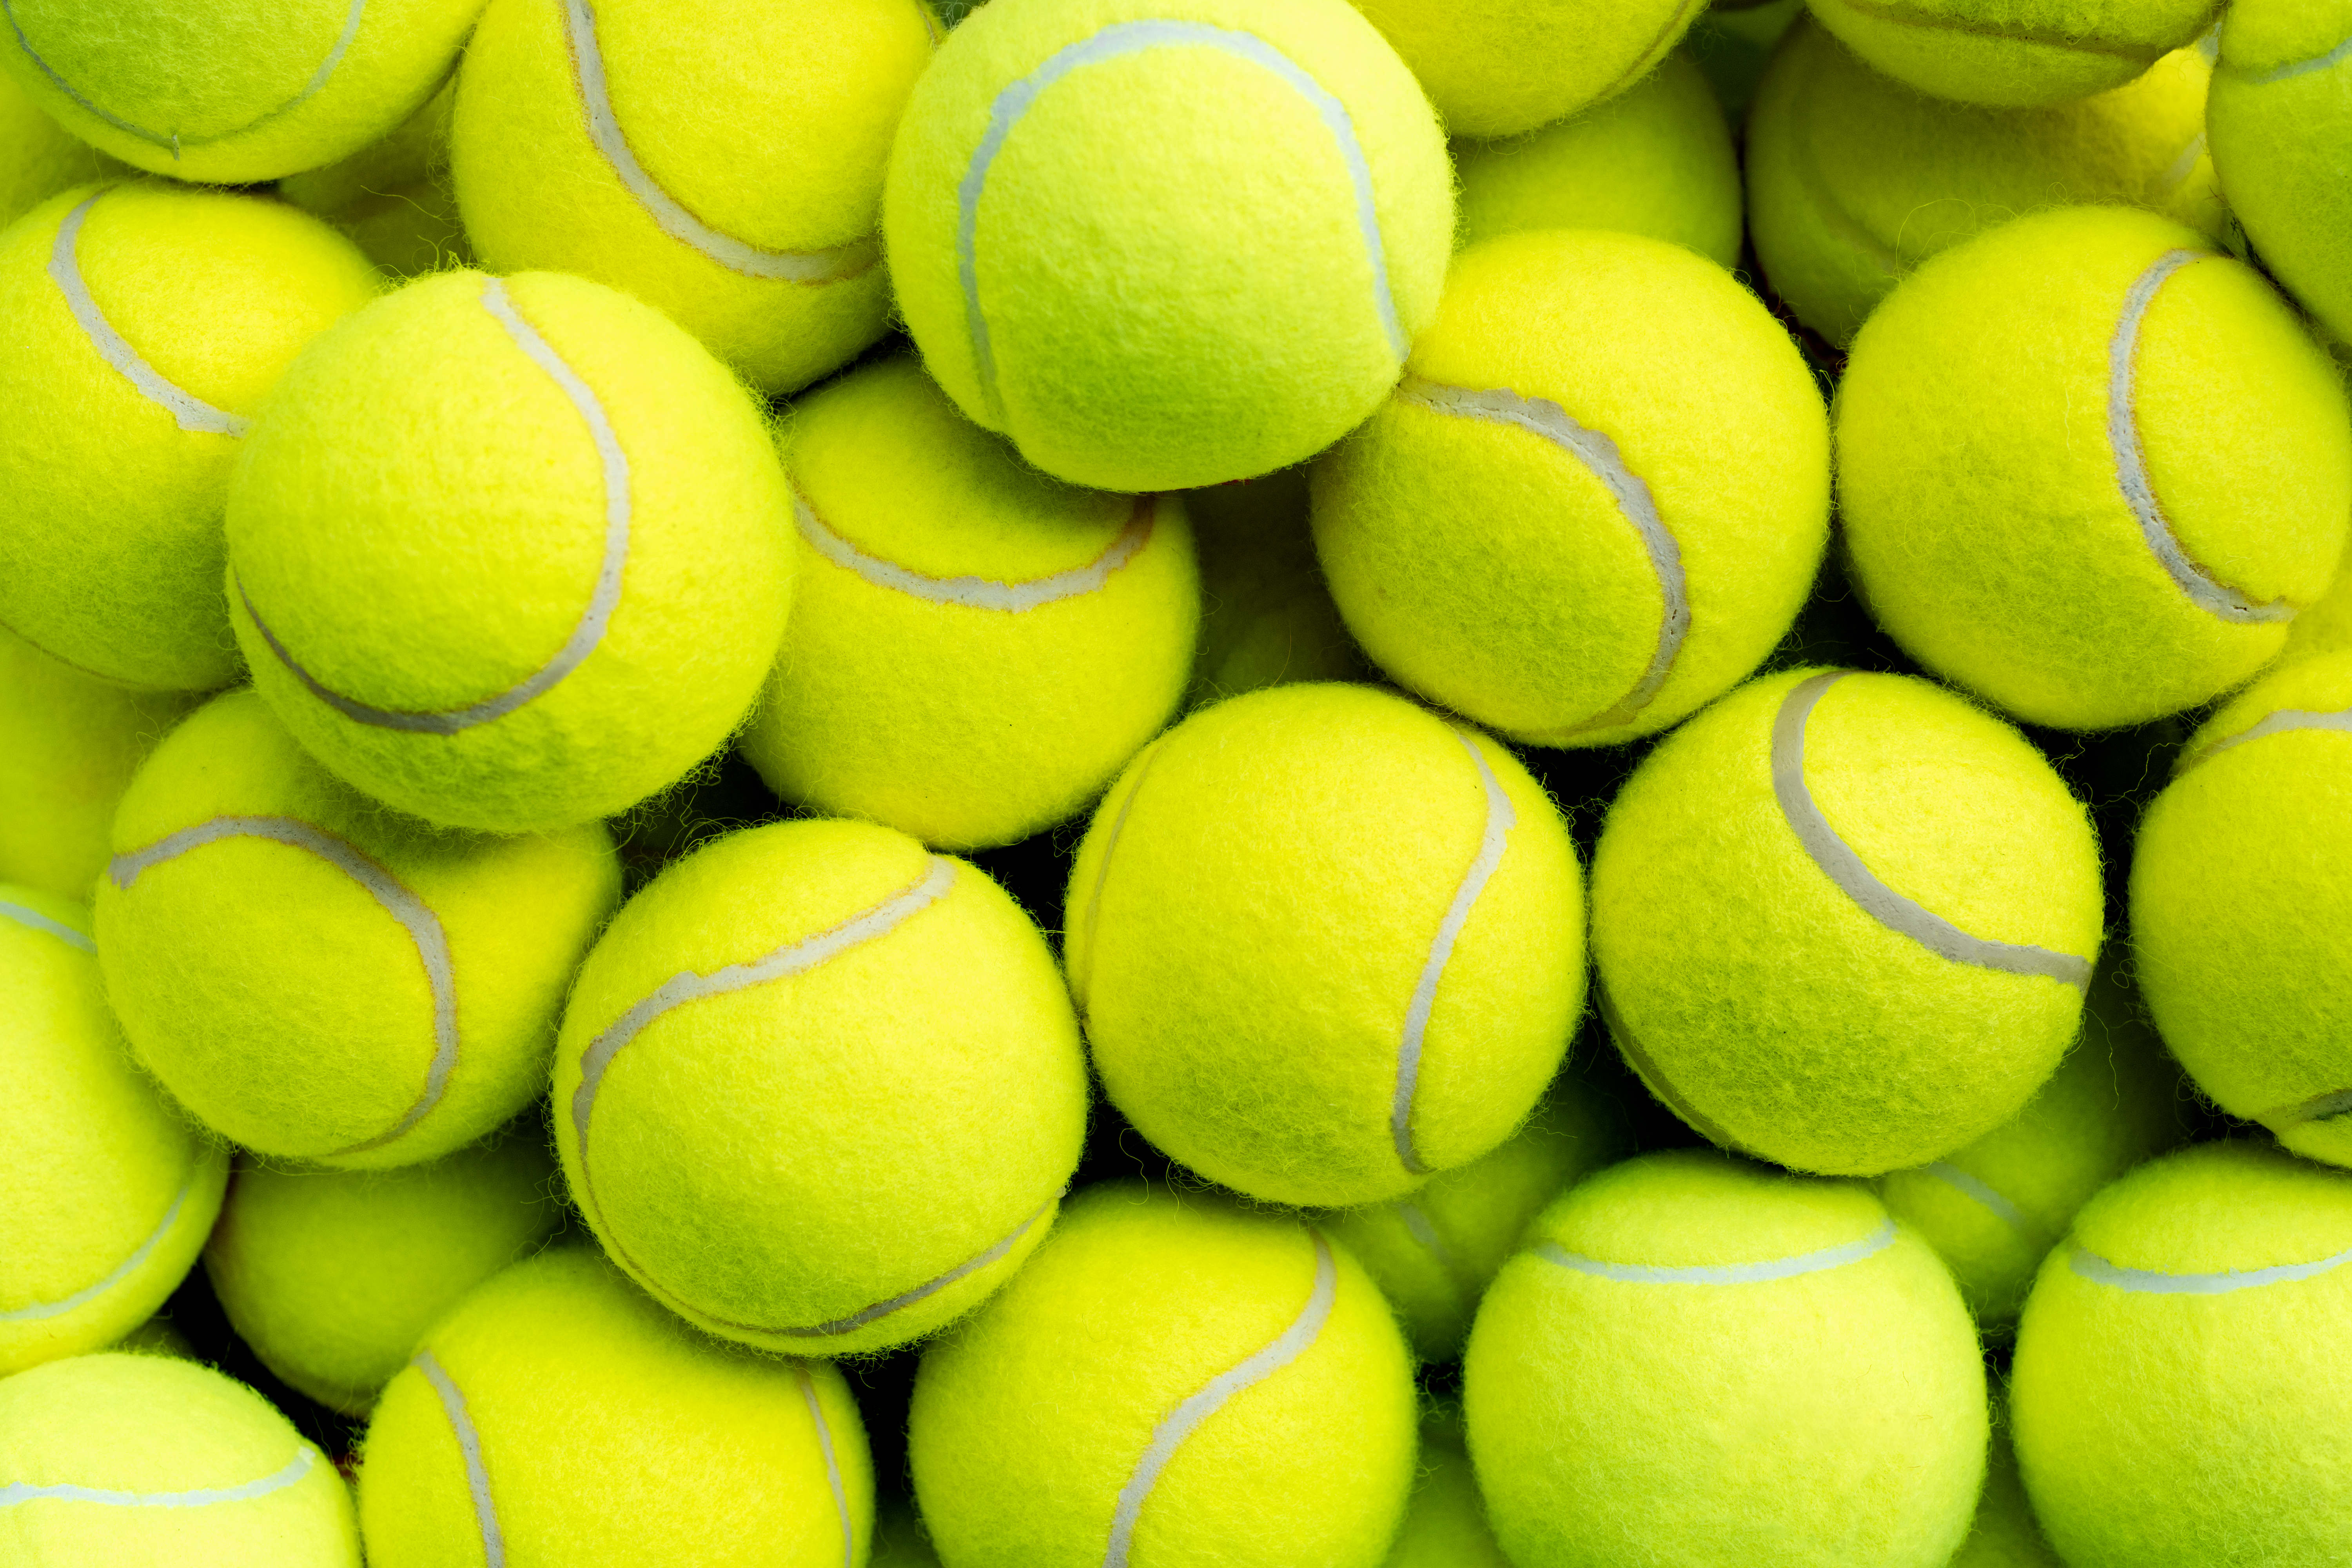 BPIF launch the Tennis Ball Challenge